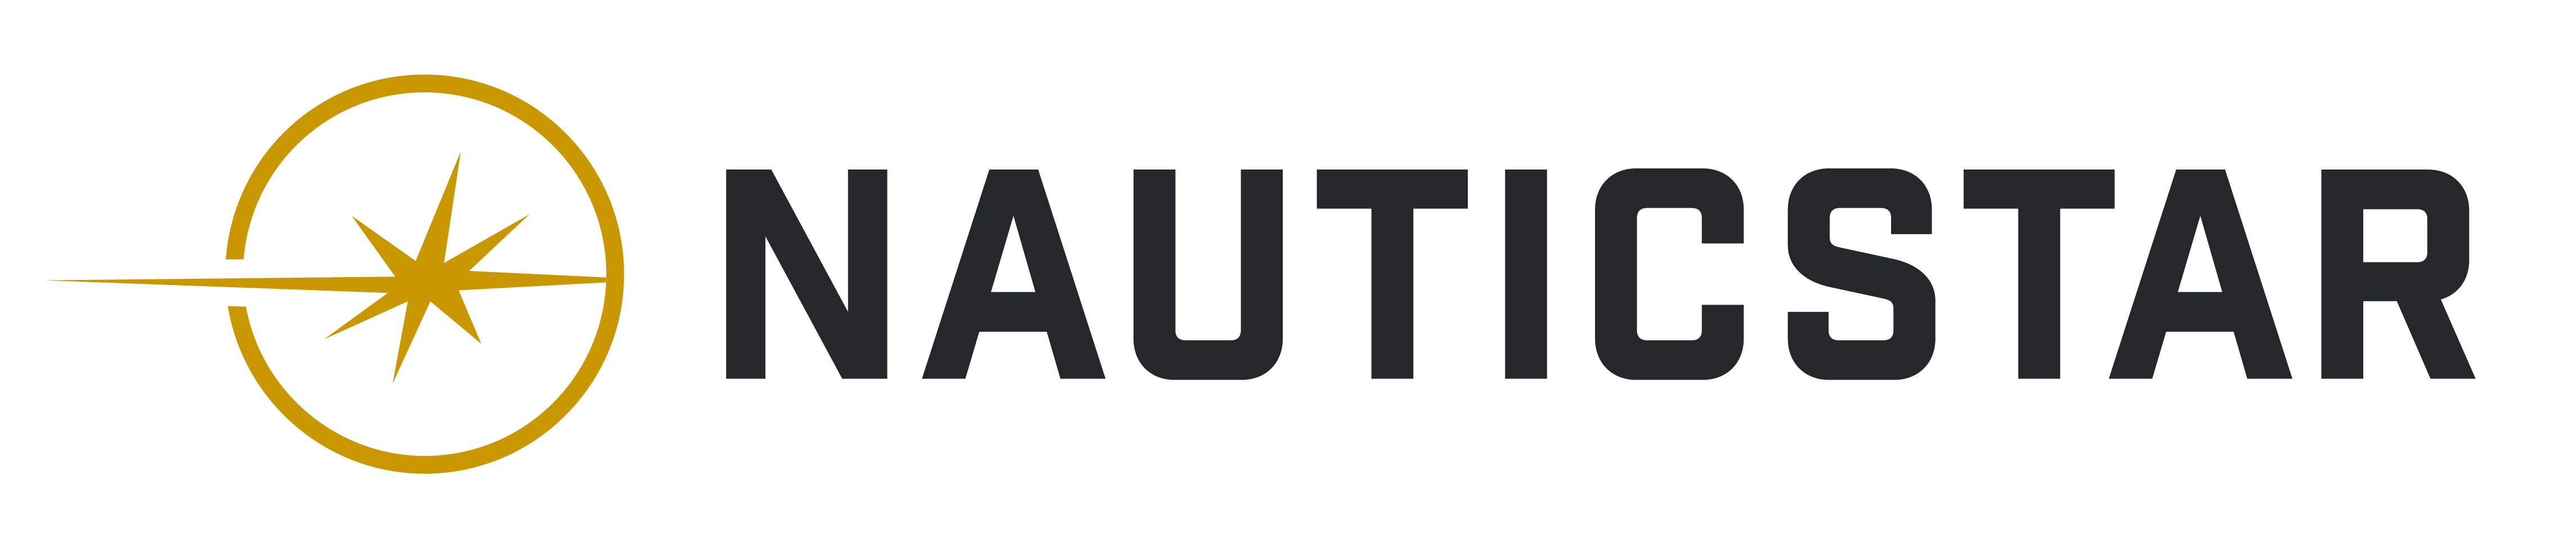 NauticStar brand logo